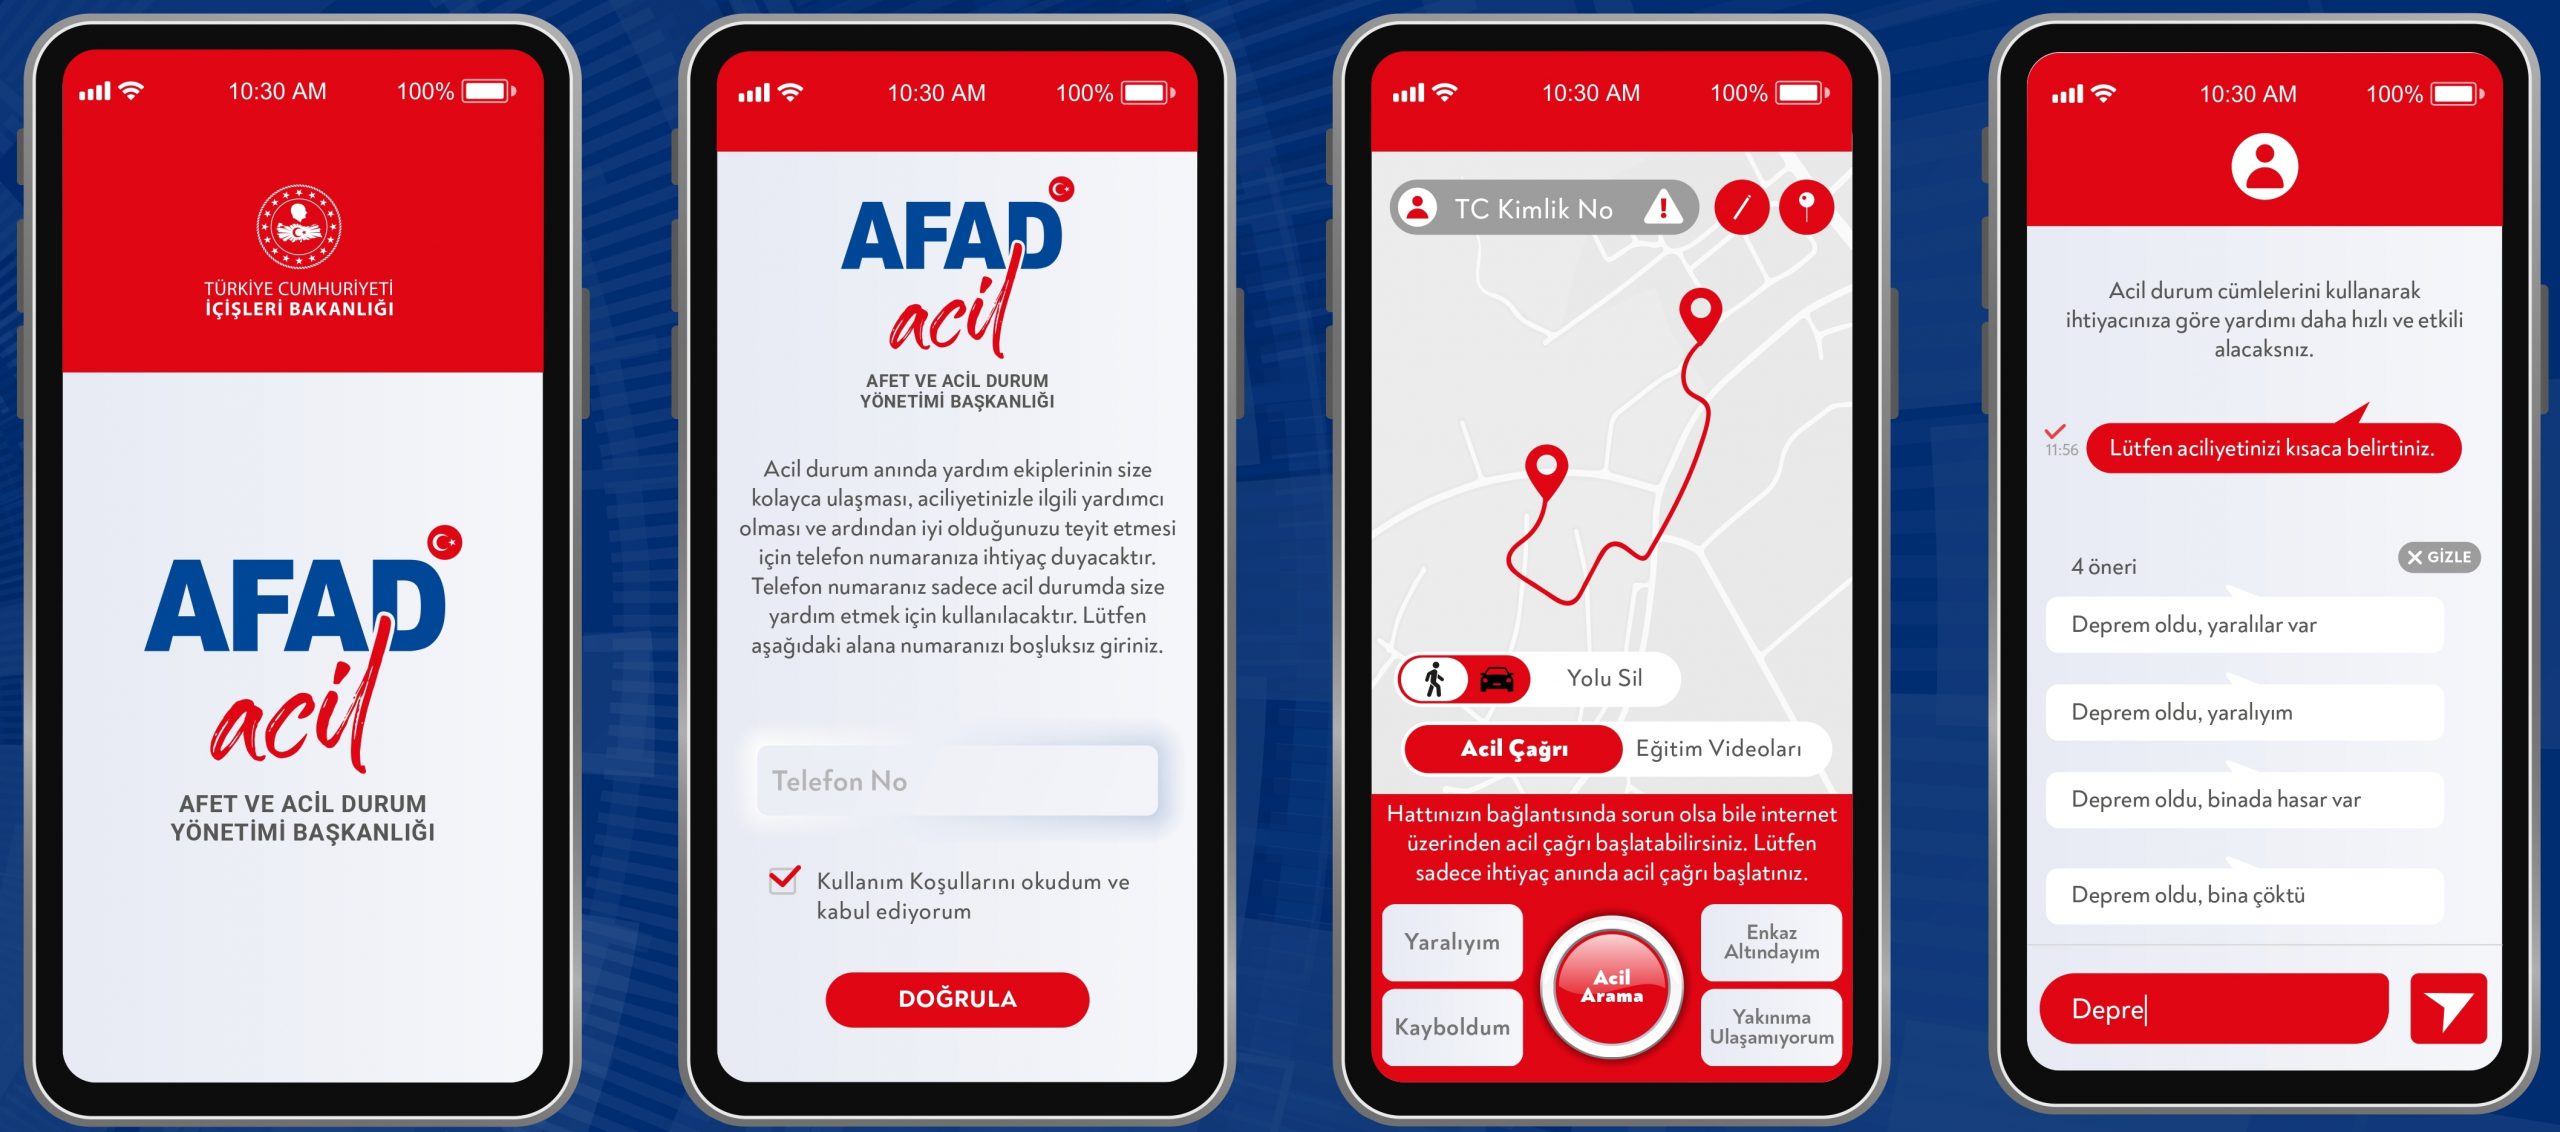 AFAD Acil mobil uygulaması yayınlandı